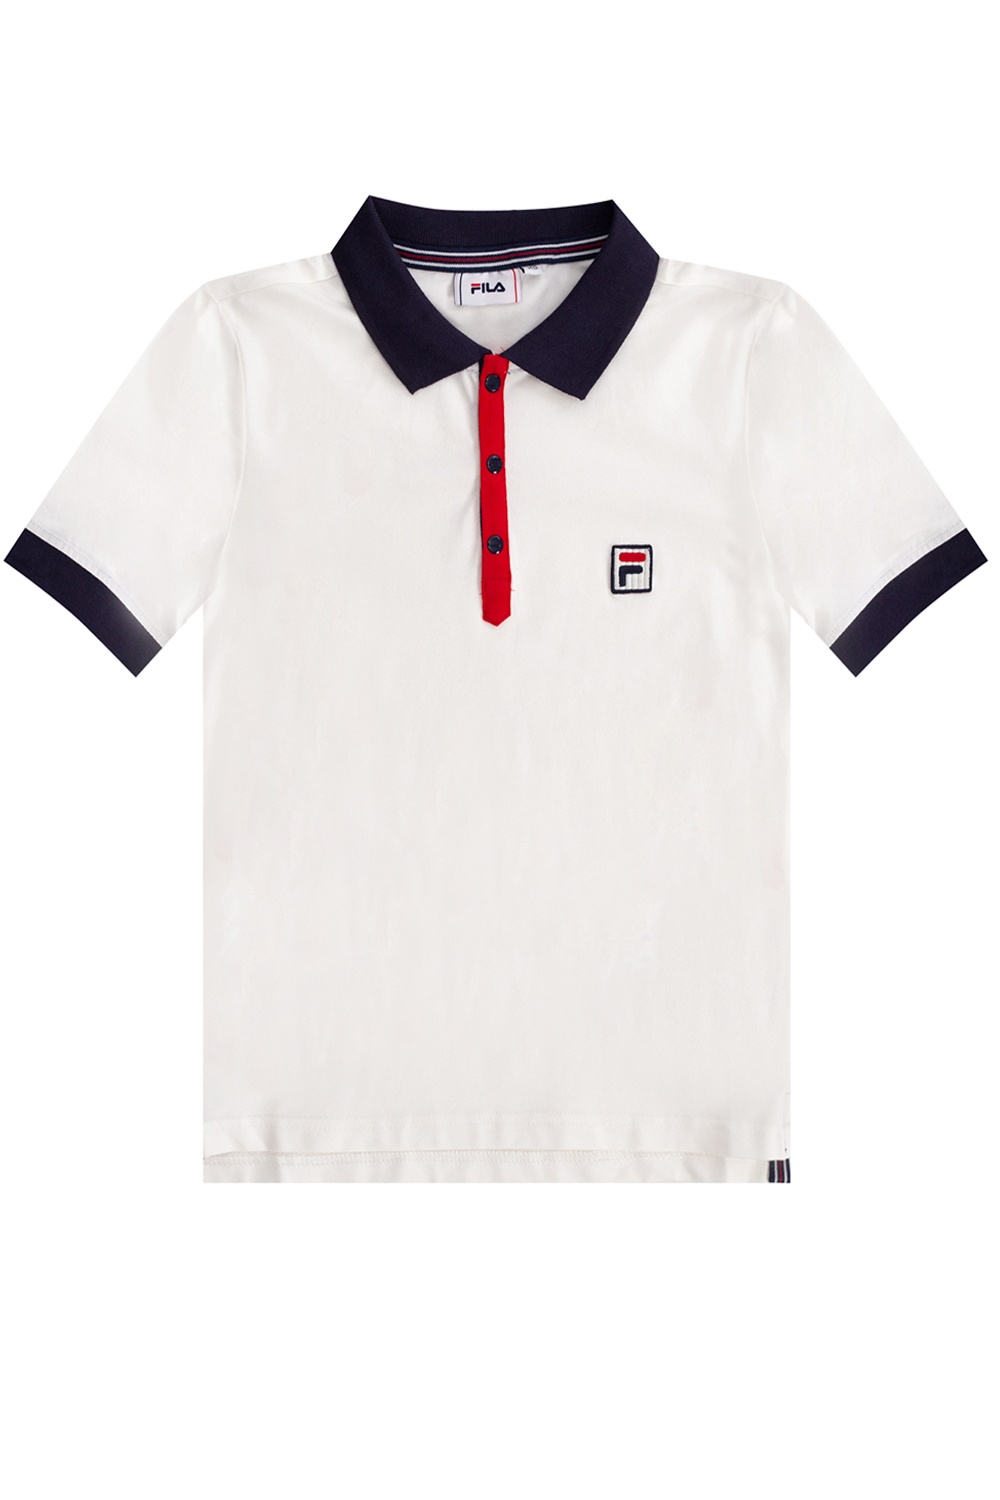 Fila Polo shirt with logo